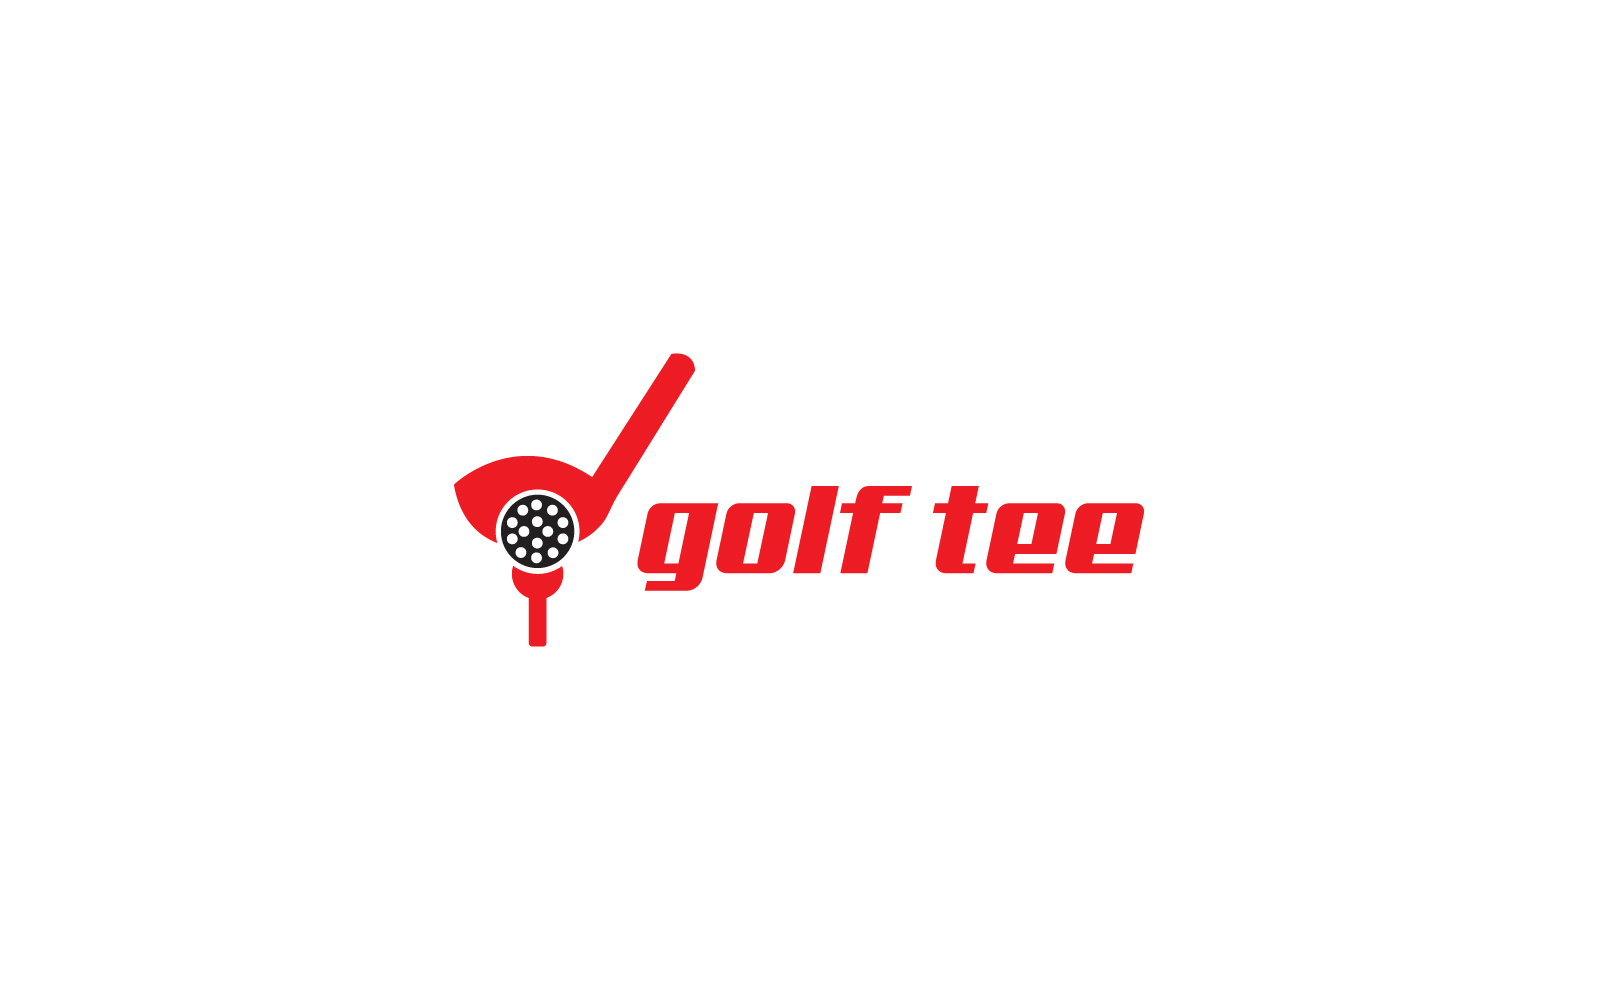 Golf tee logo design template